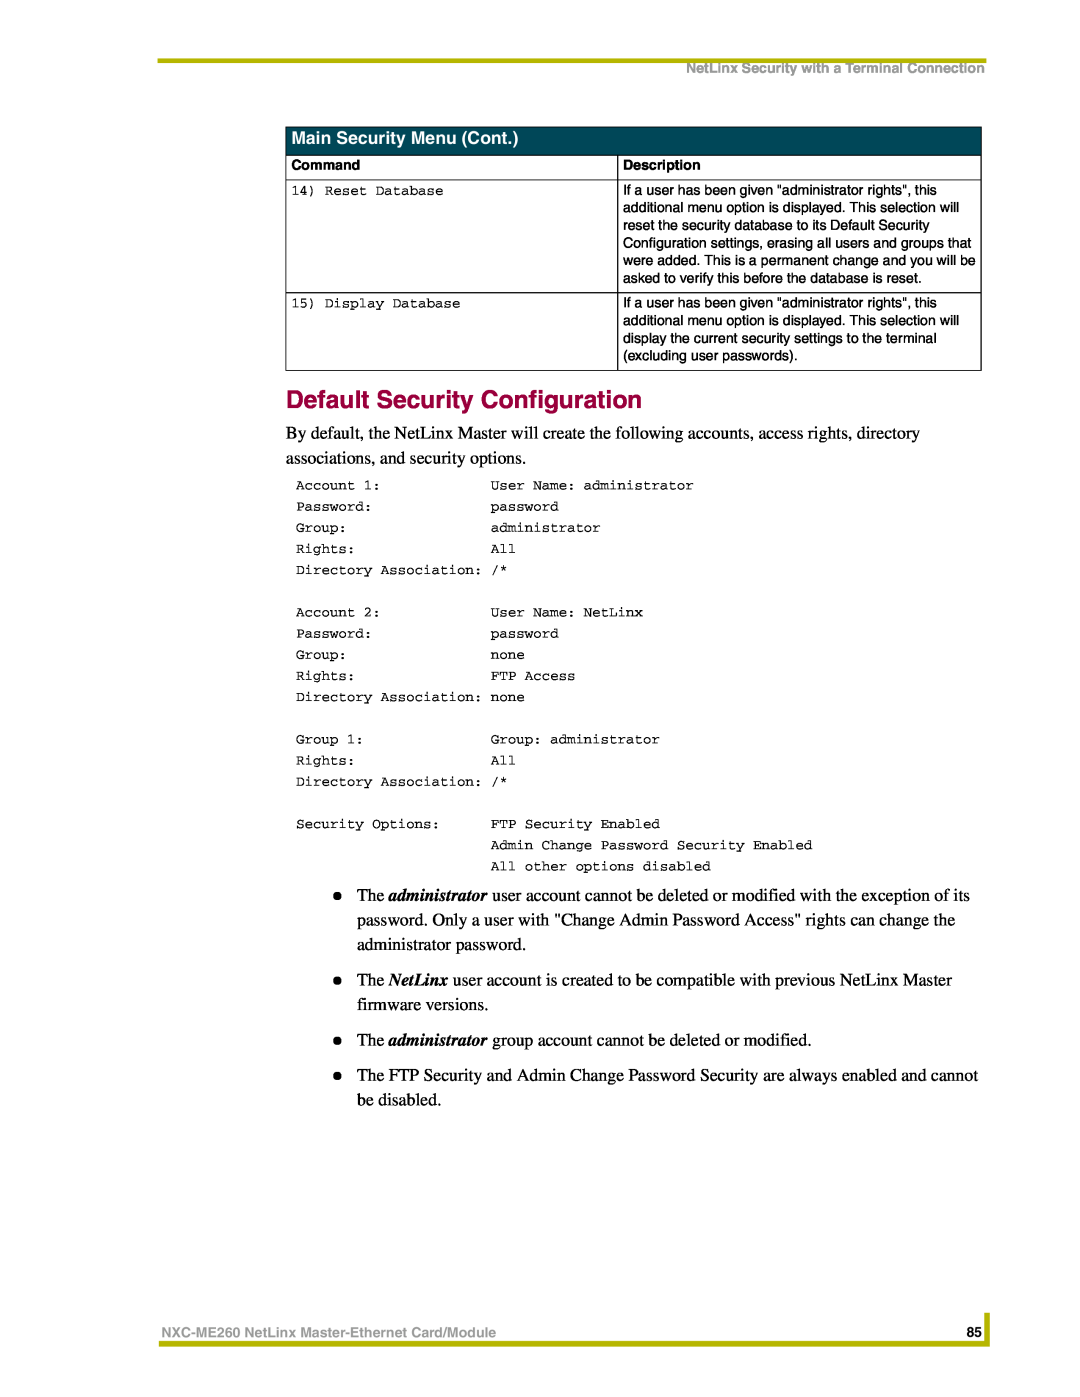 AMX NXC-ME260 instruction manual Default Security Configuration, Main Security Menu Cont 